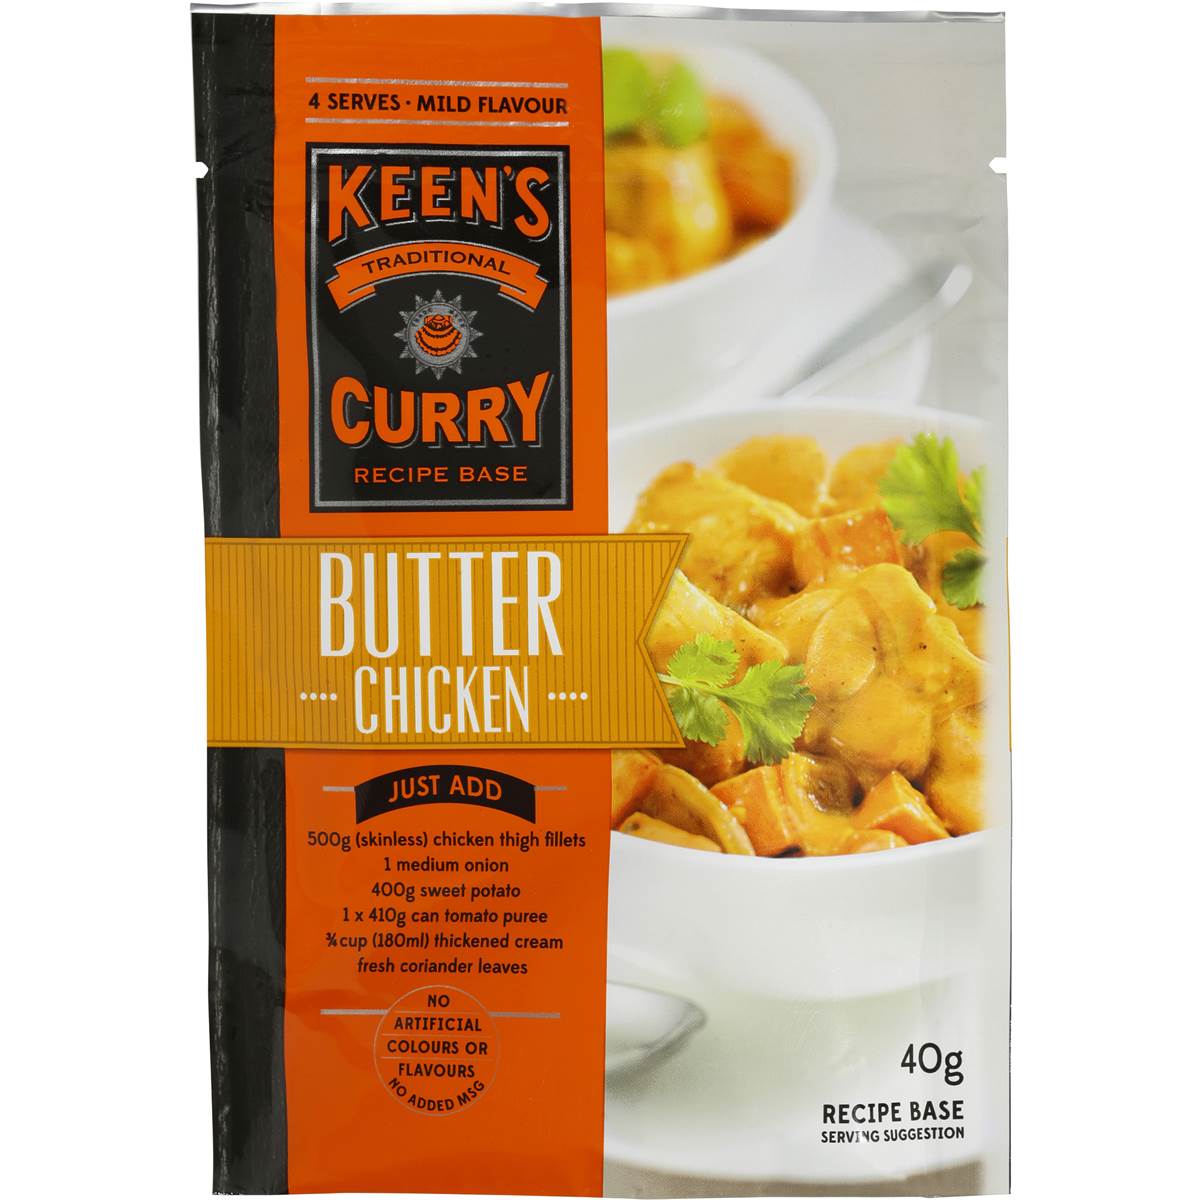 Keens Curry Recipe Base Butter Chicken